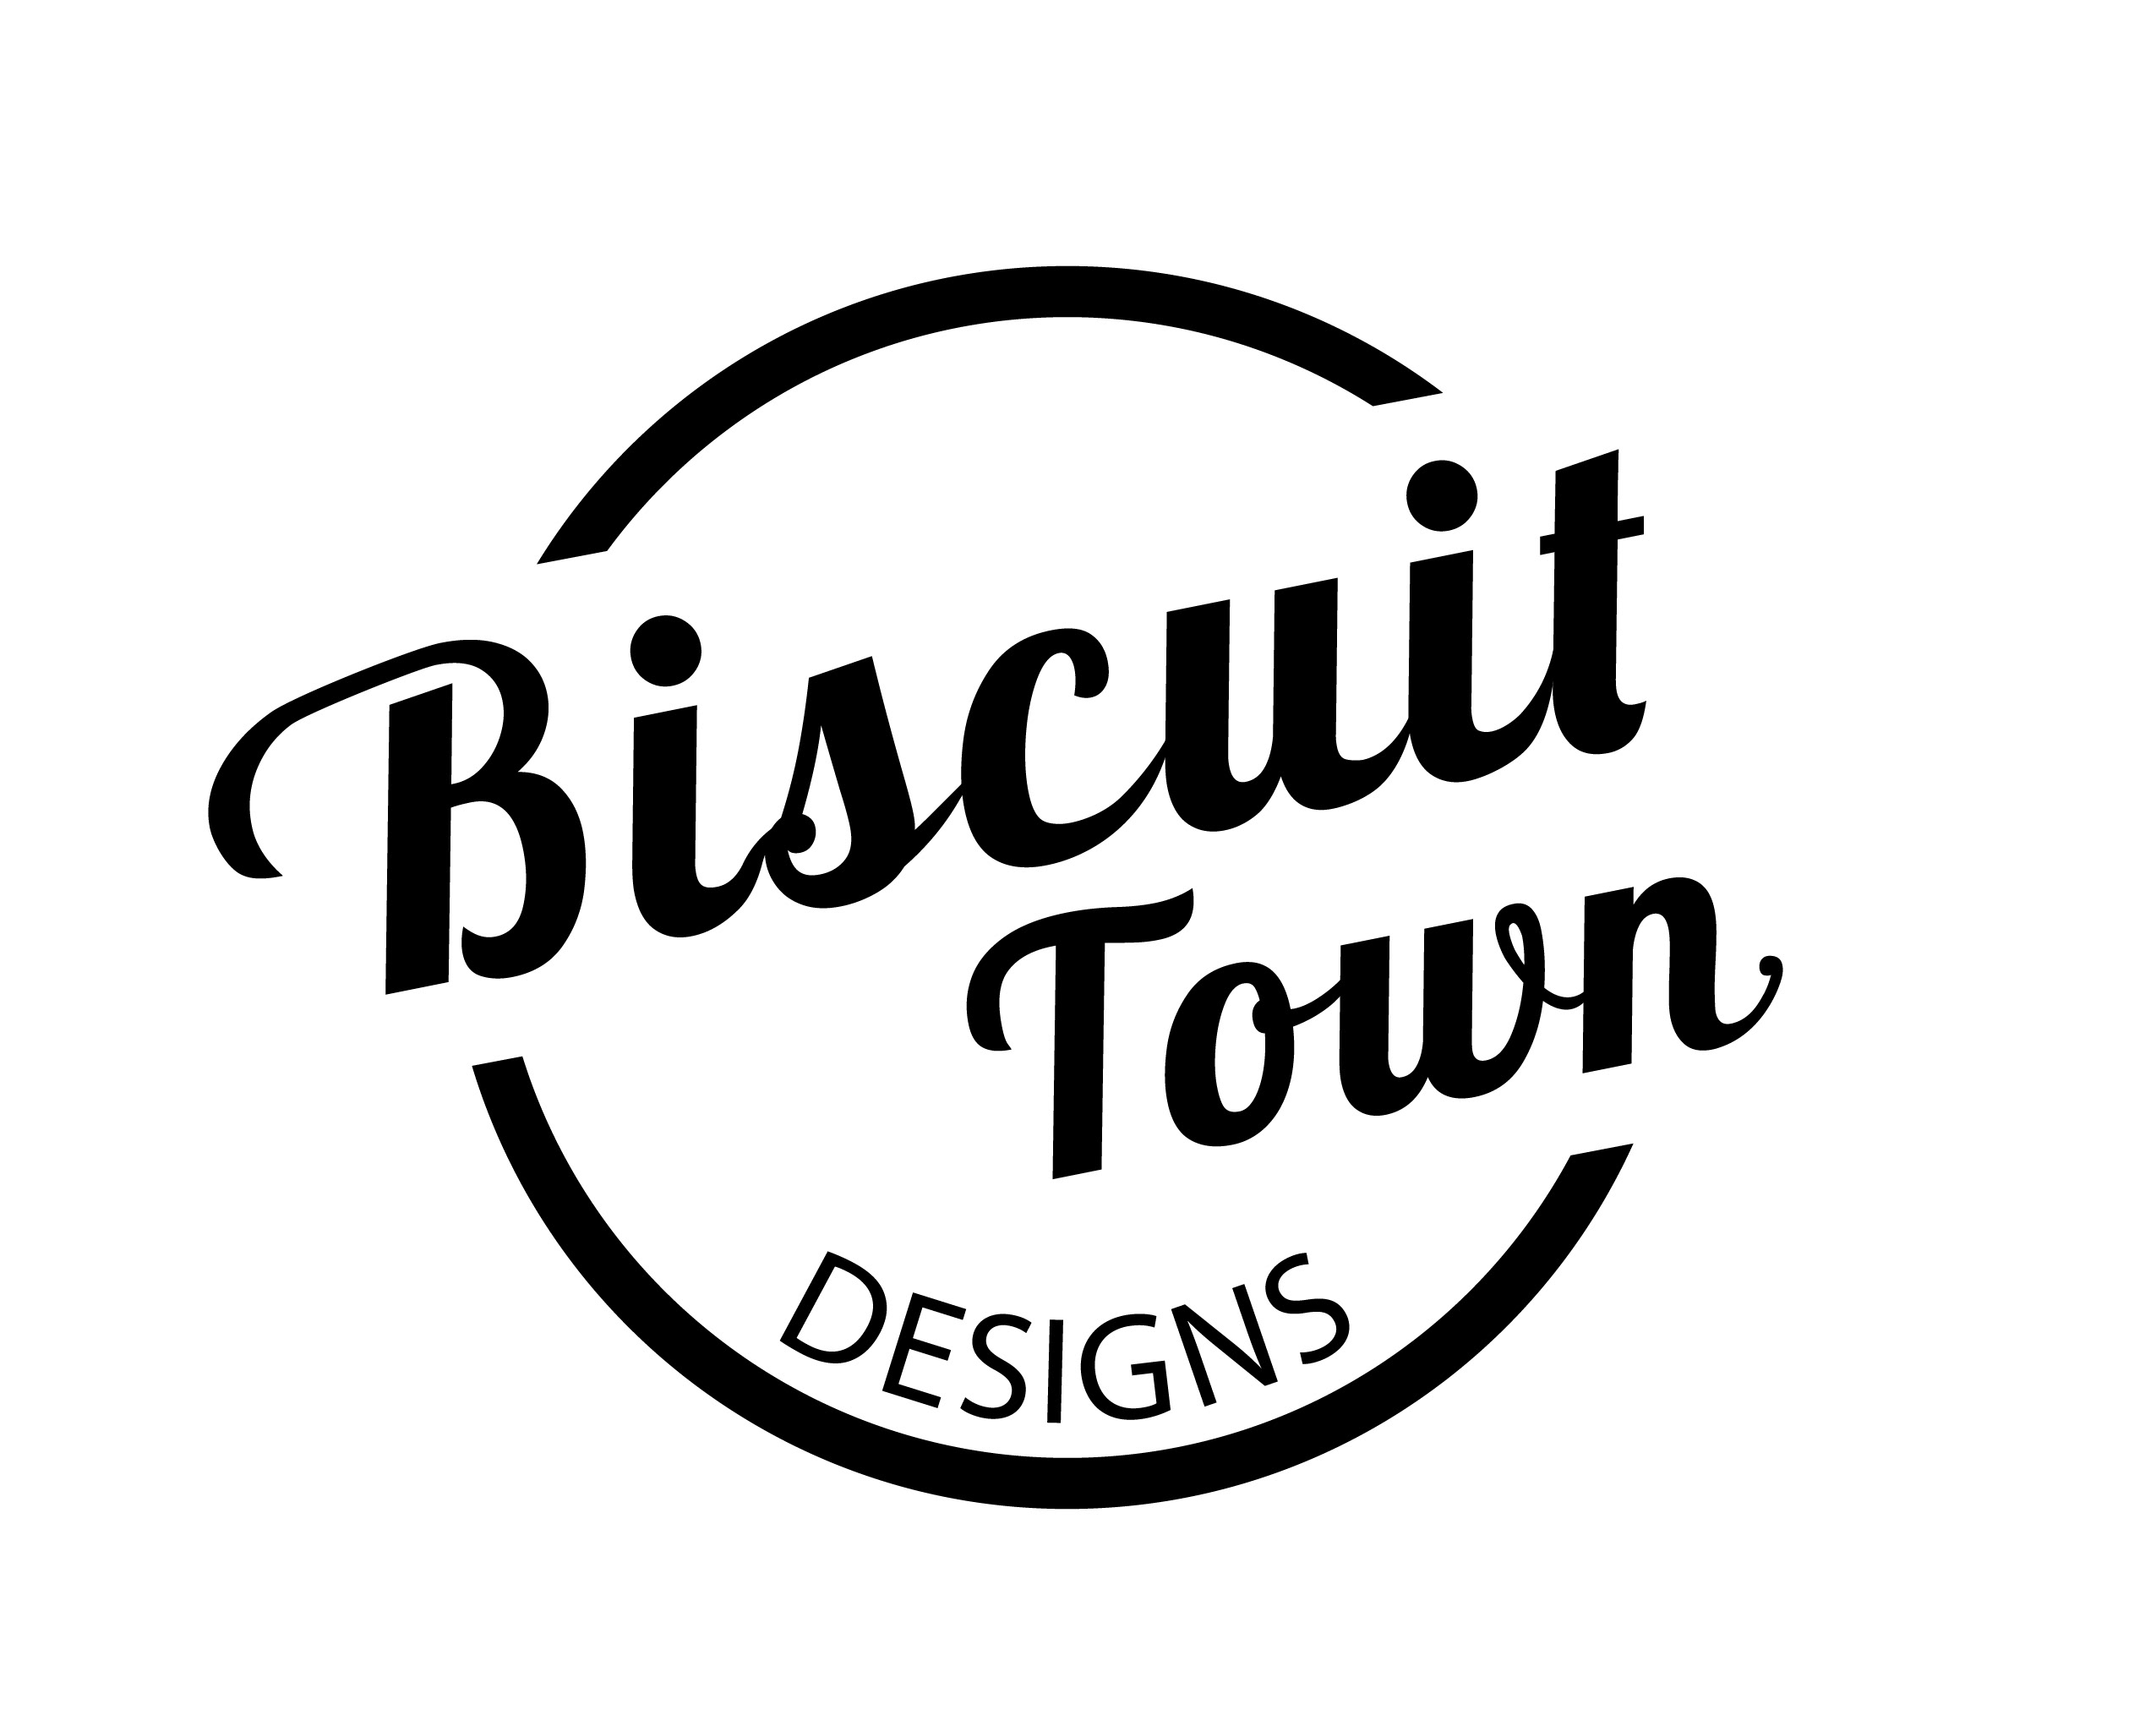 Biscuit Town Designs